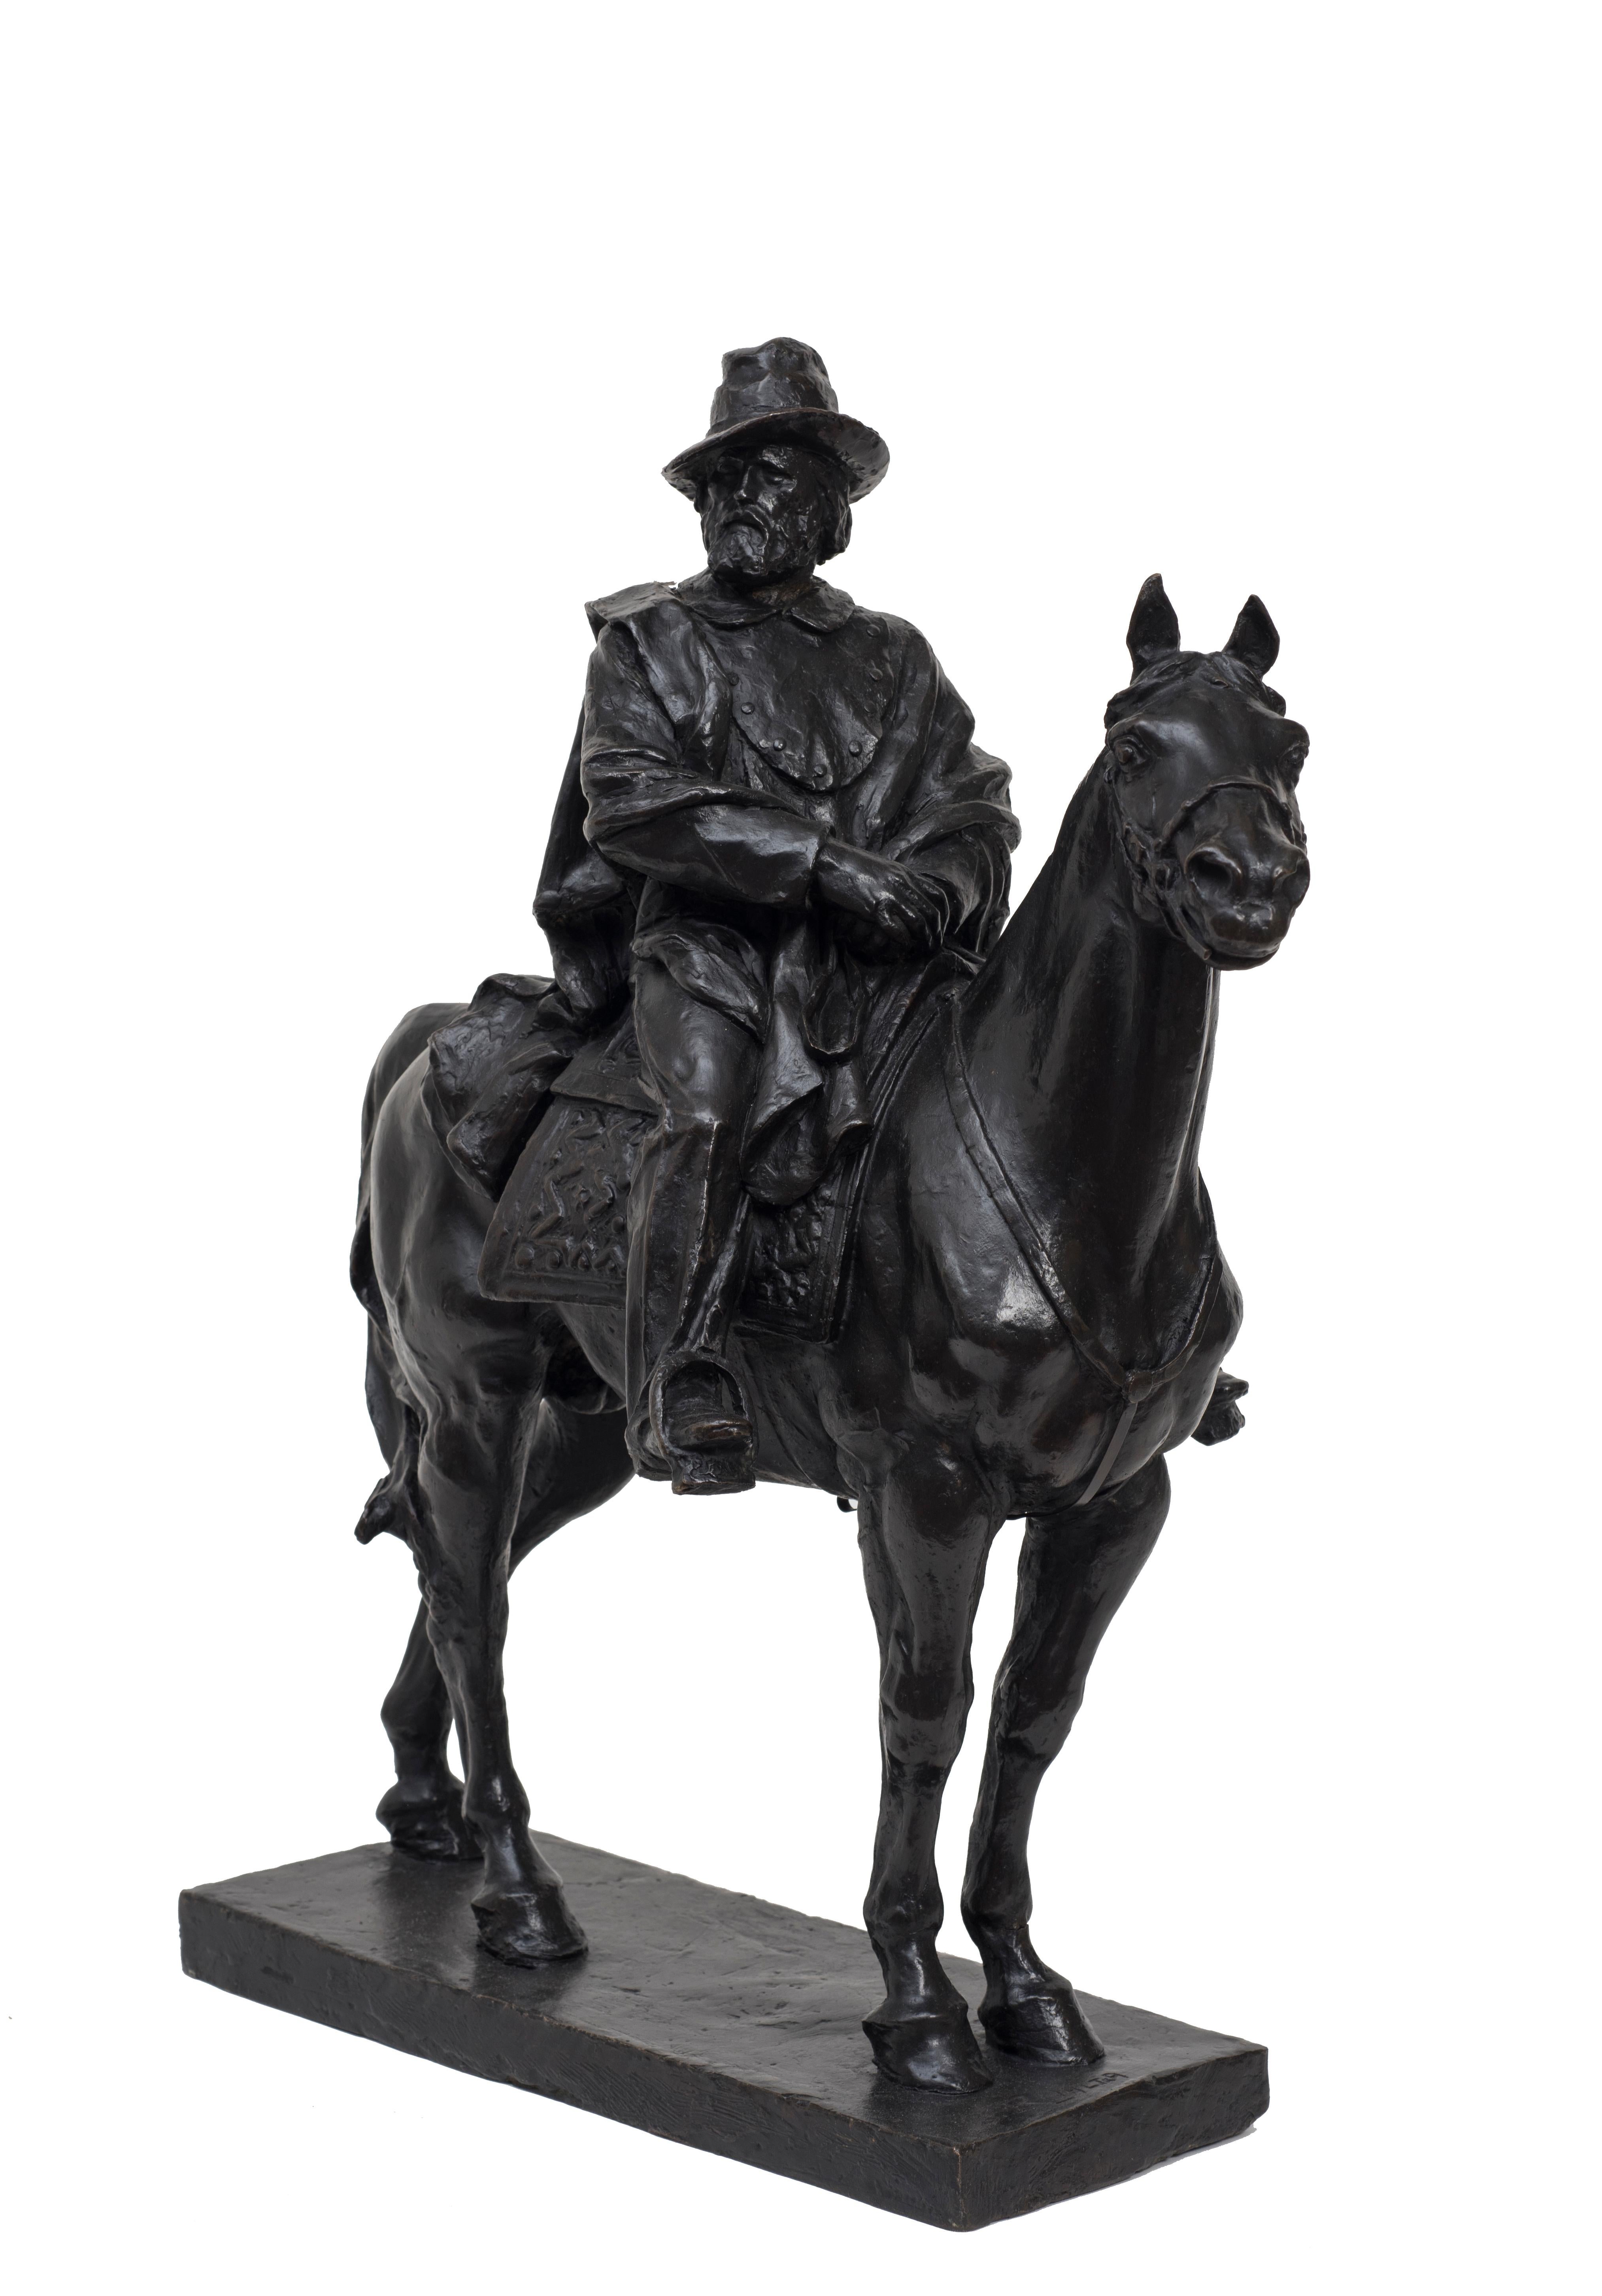 Garibaldi Riding a Horse - Original Bronze Sculpture by Carlo Rivalta 